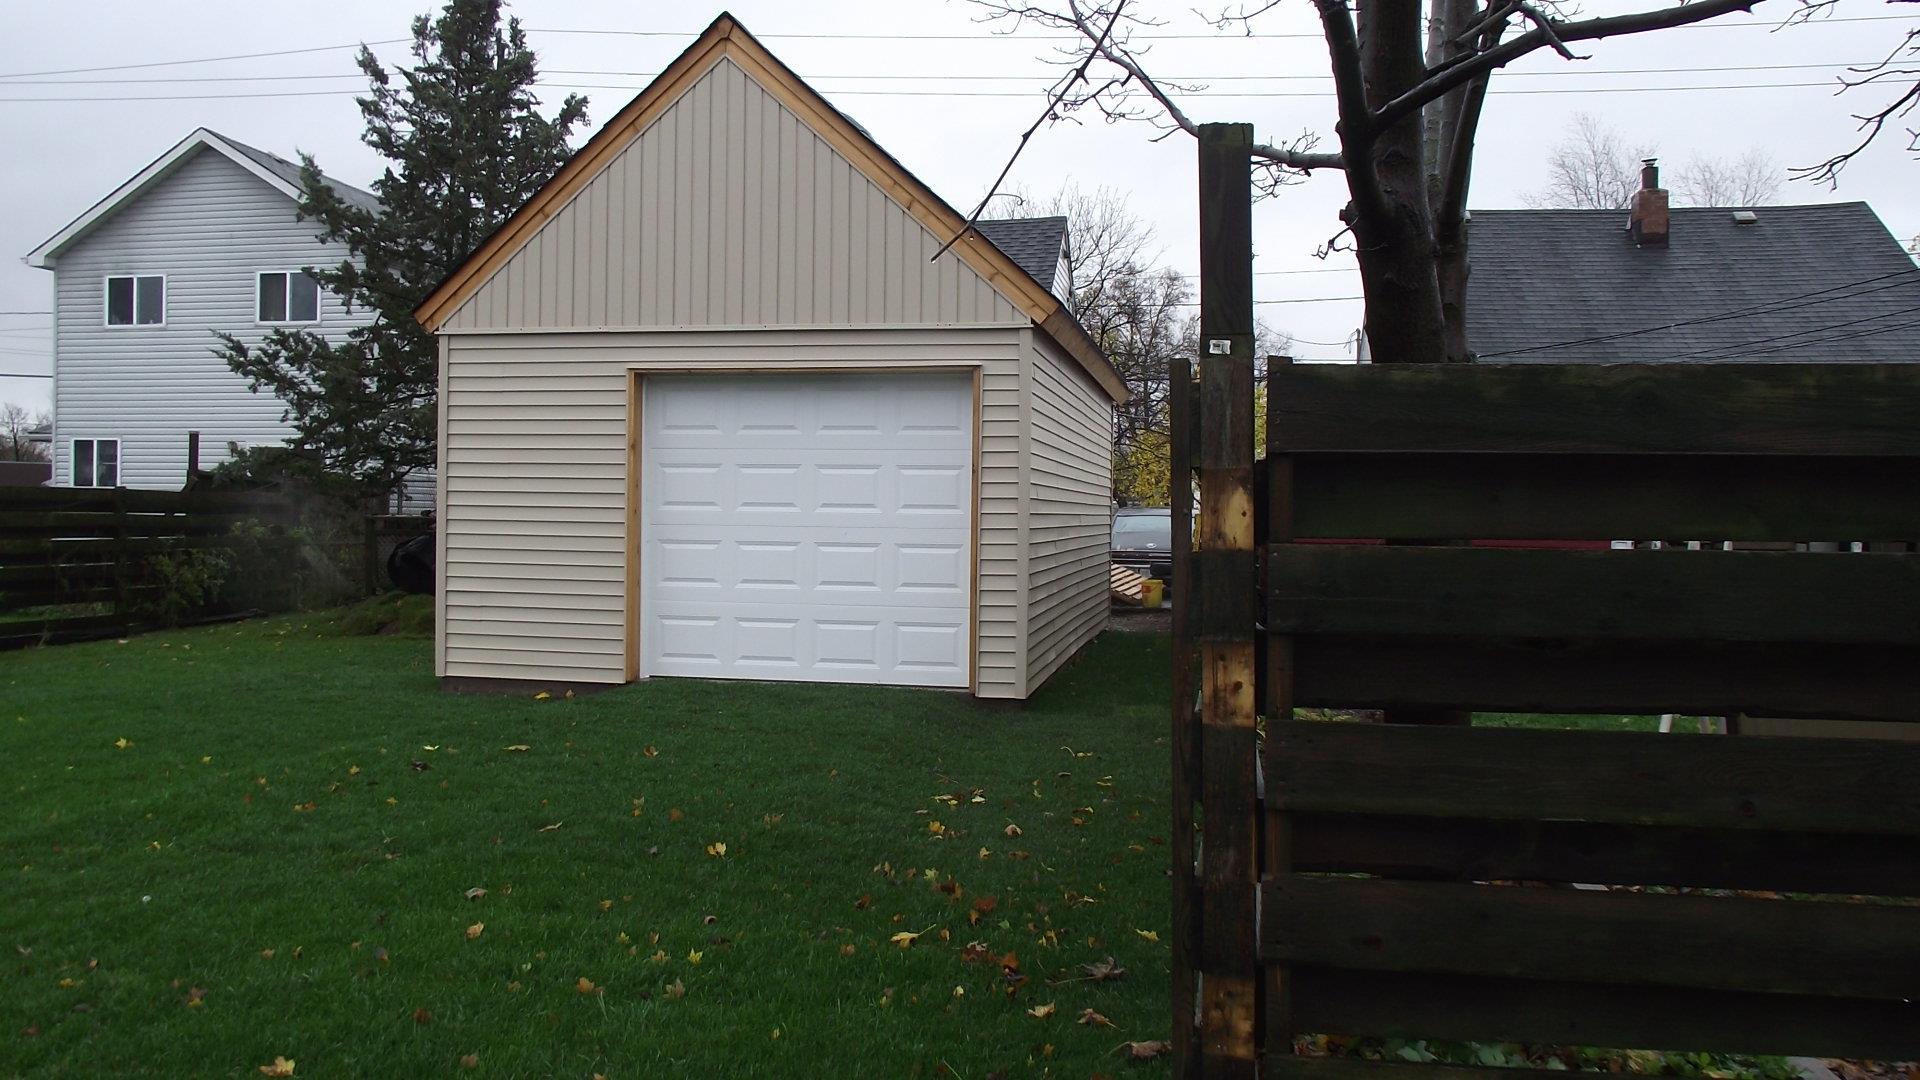 Montcrest garage kits 14x24 with double casment vinyl windows in Cambridge,Ontario.ID number 154973-